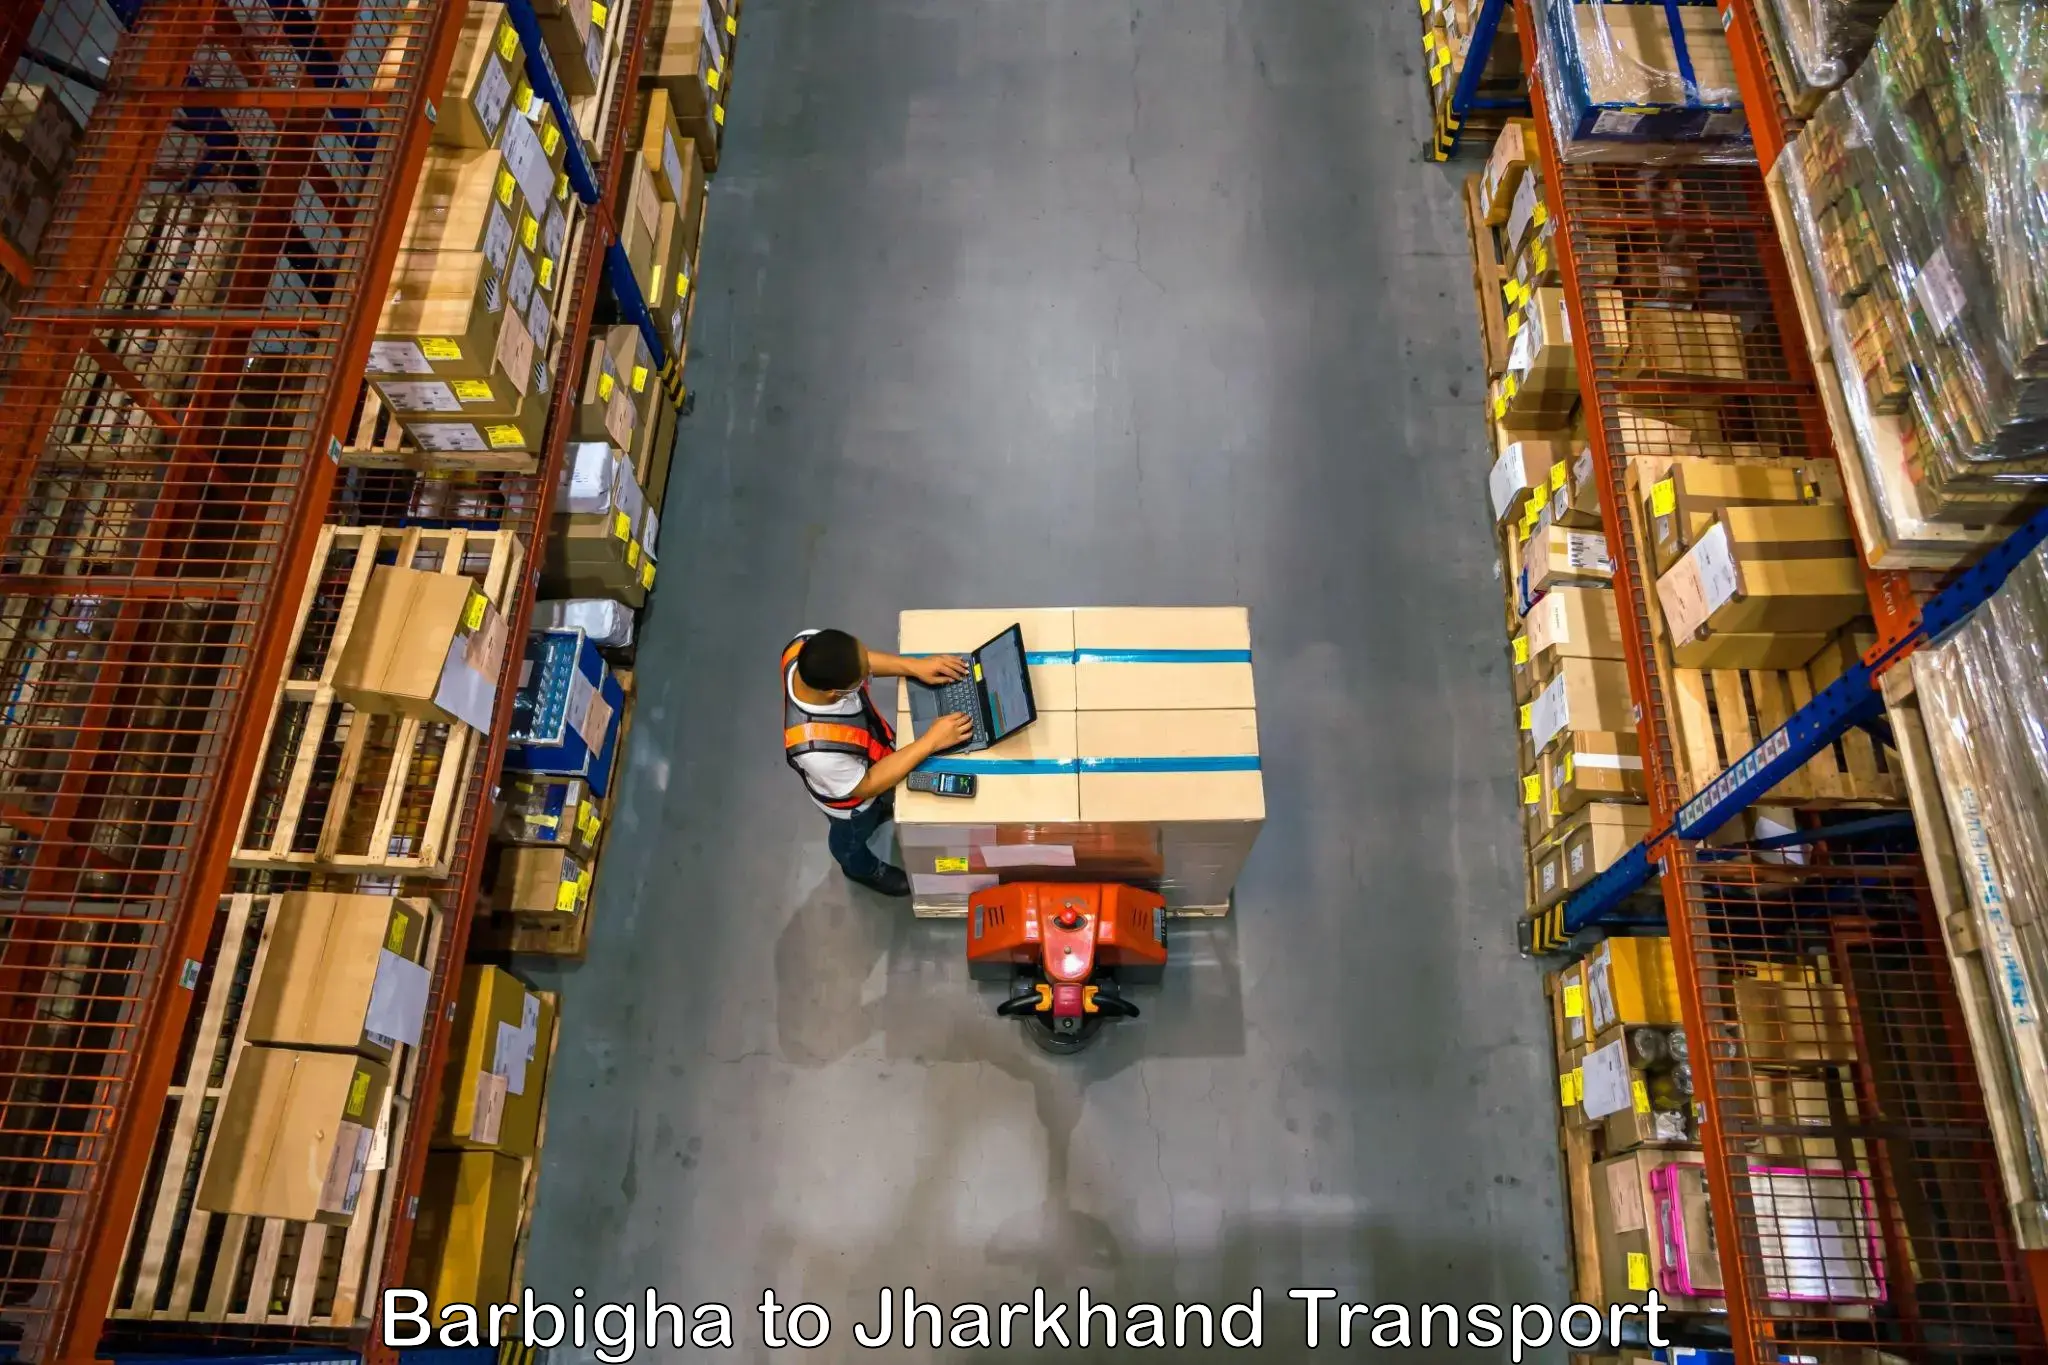 Truck transport companies in India Barbigha to Medininagar